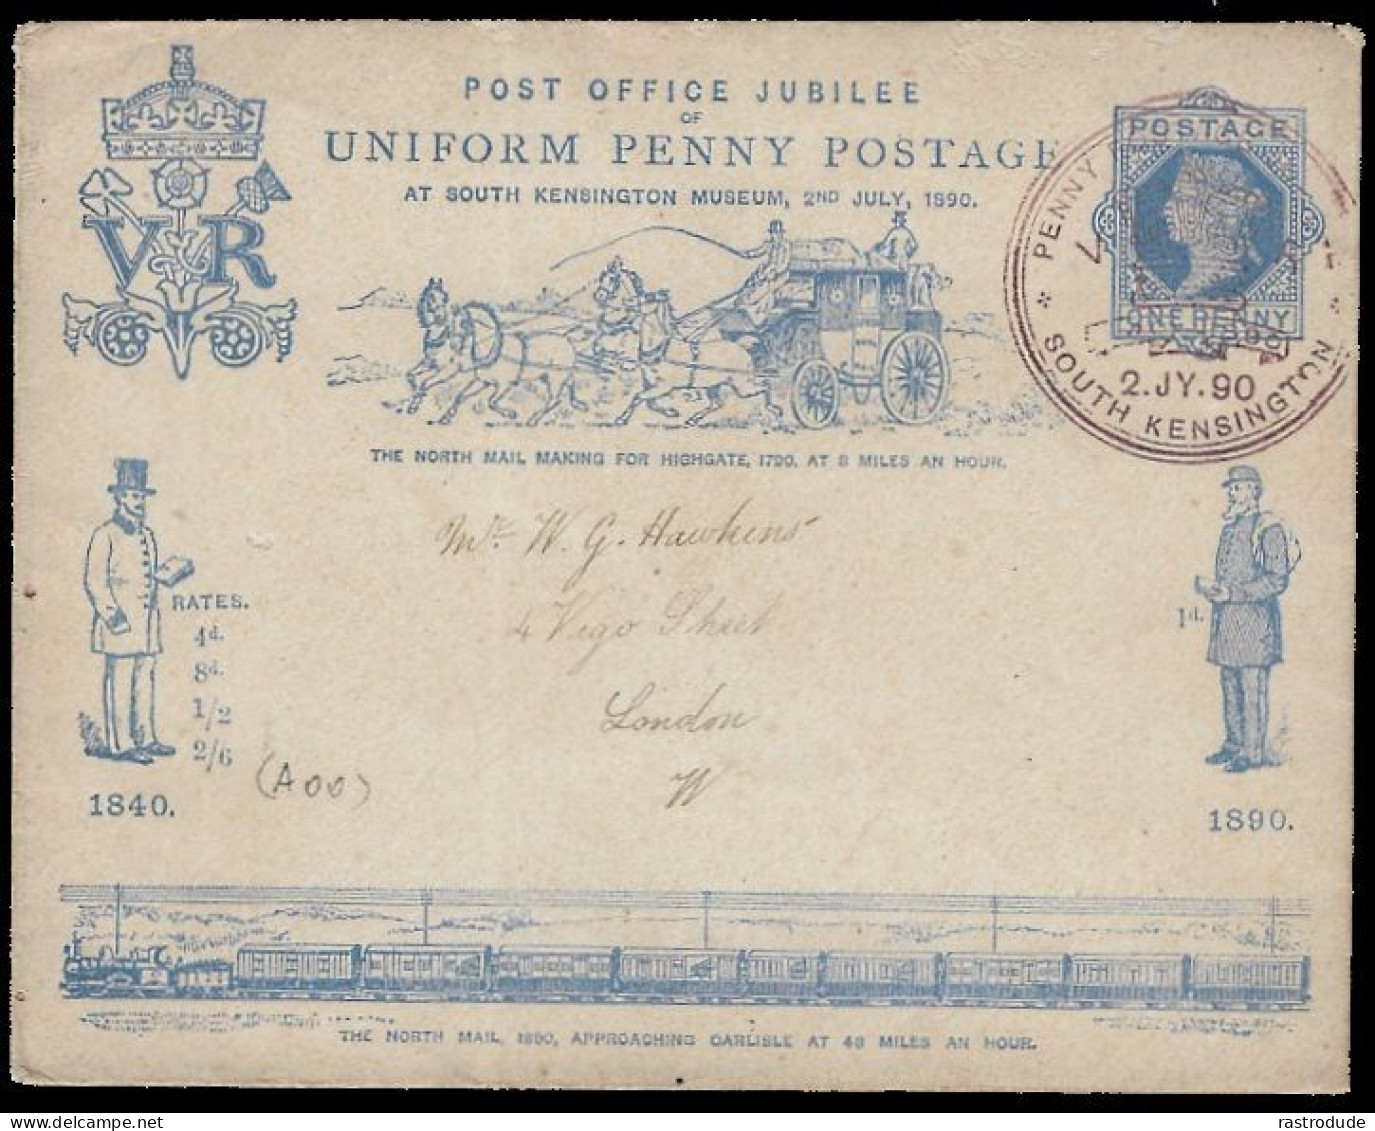 1890 GB 2 JULY FDC UNIFORM PENNY POSTAGE JUBILEE ENVELOPE - COMMEM. CANCEL. VF - Luftpost & Aerogramme